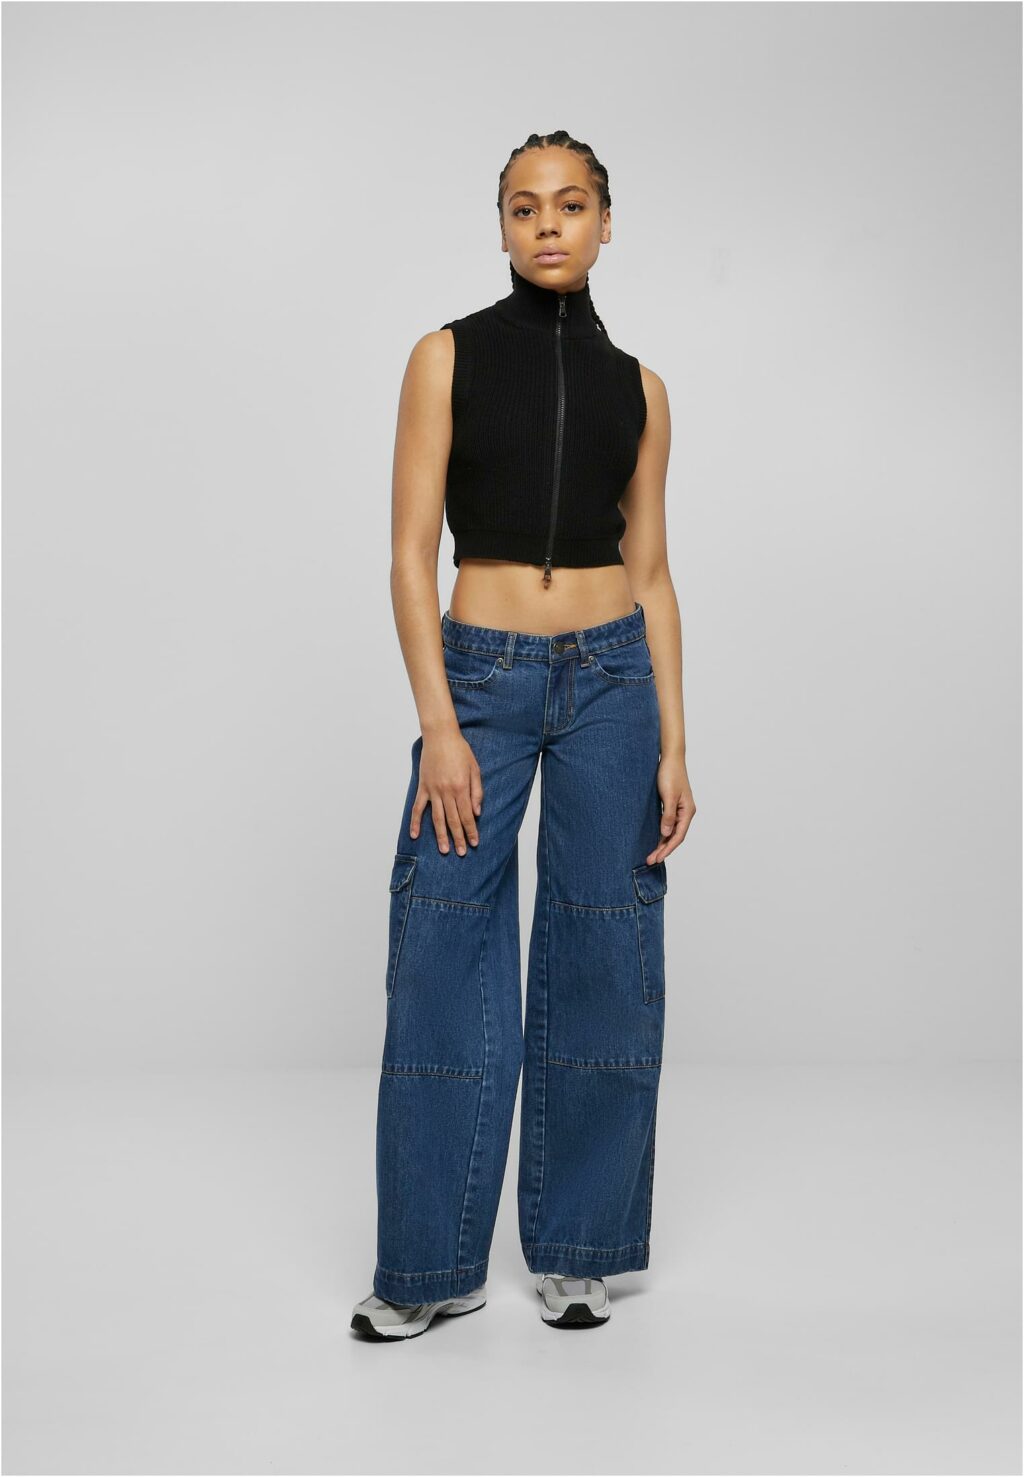 Urban Classics Ladies Short Knit Vest black TB6083